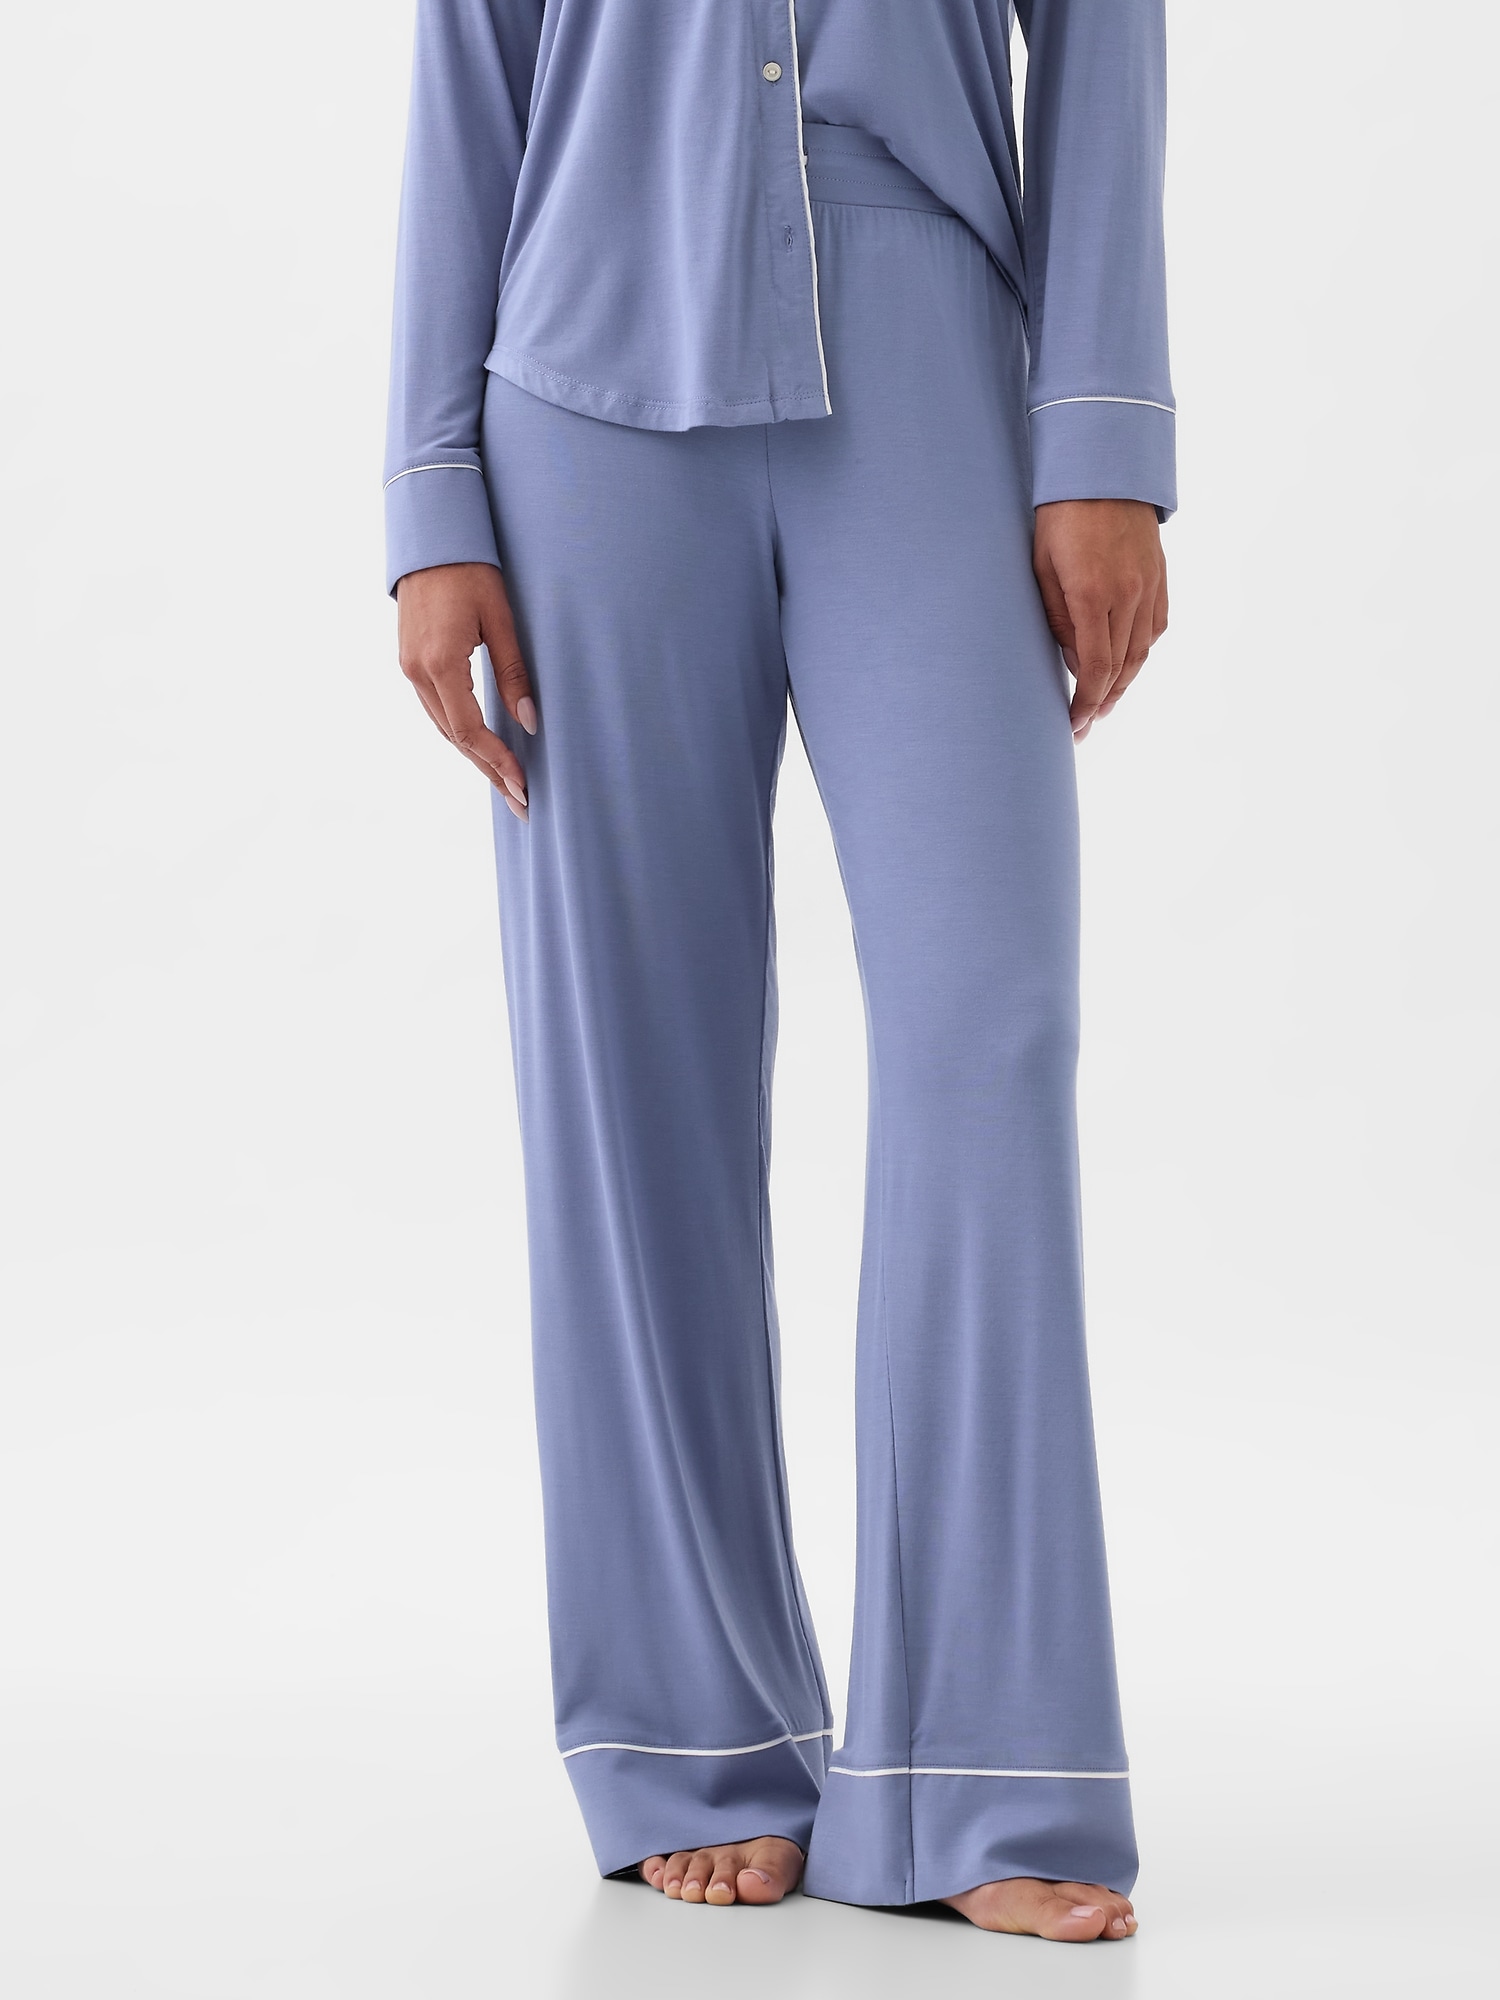 Large size sleepwear women bottoms sleep pants modal cotton pajama